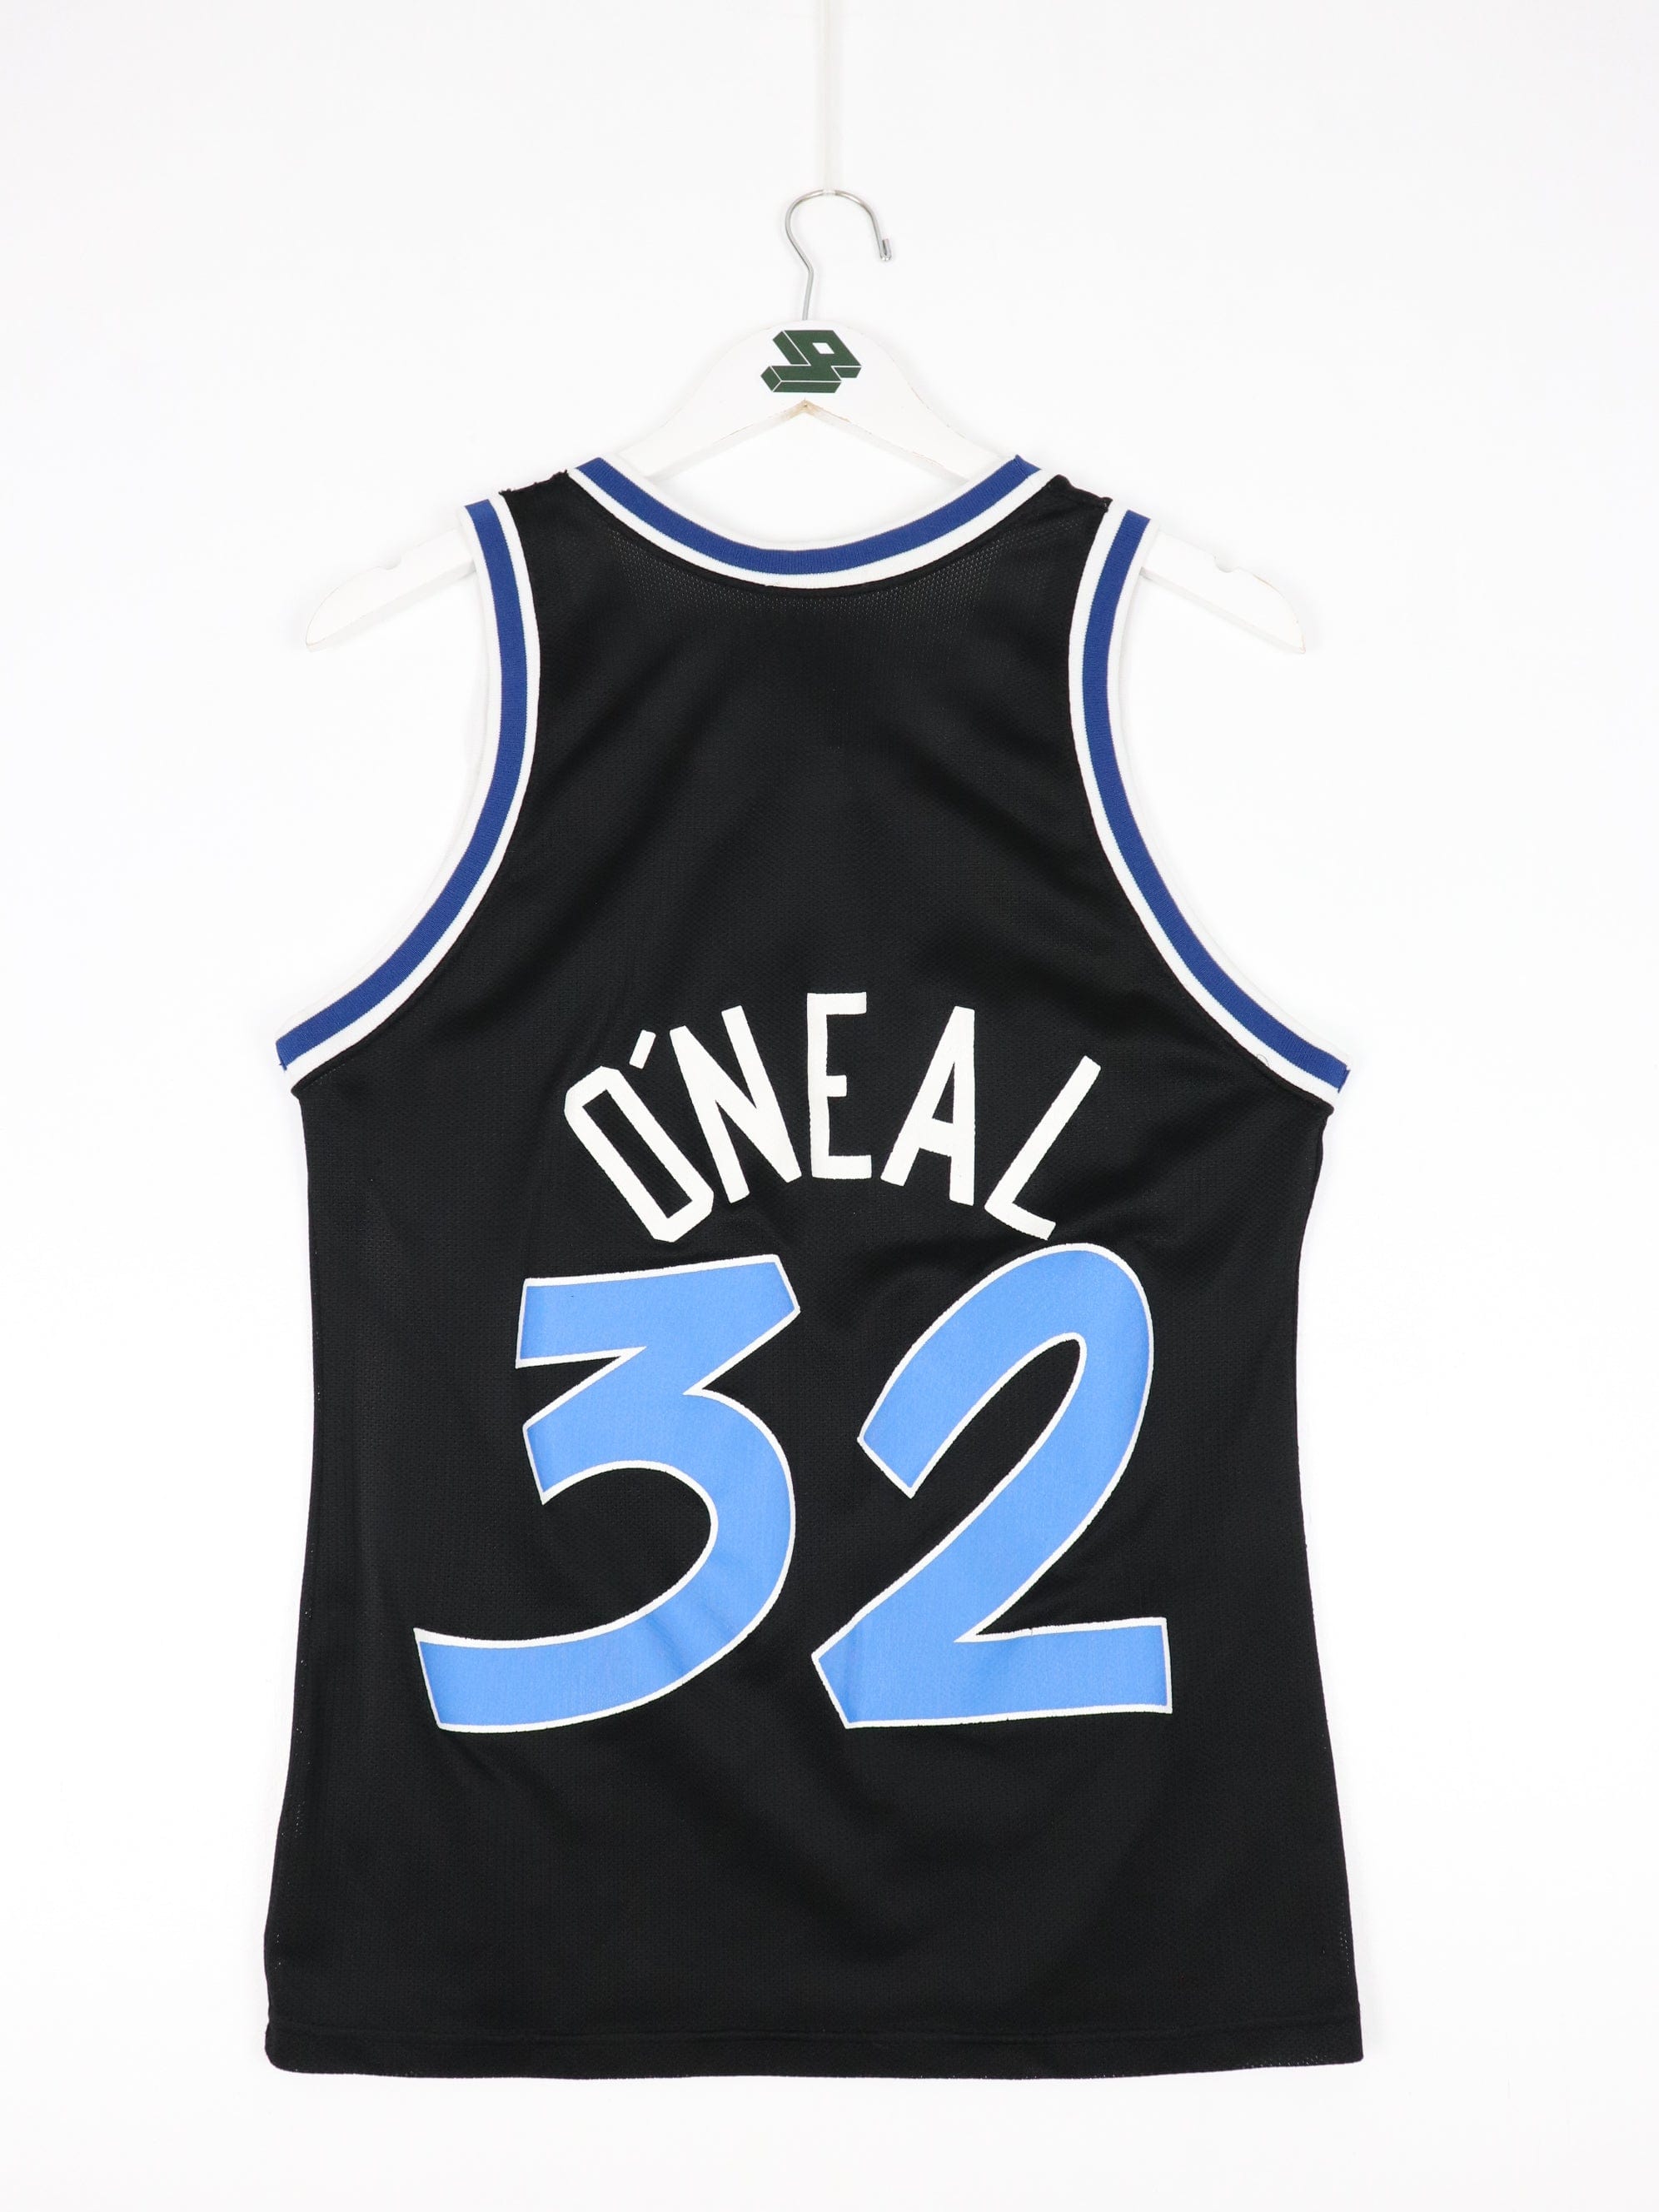 Vintage NBA Champion Shaquille O'Neal Orlando Magic Jersey Size 36